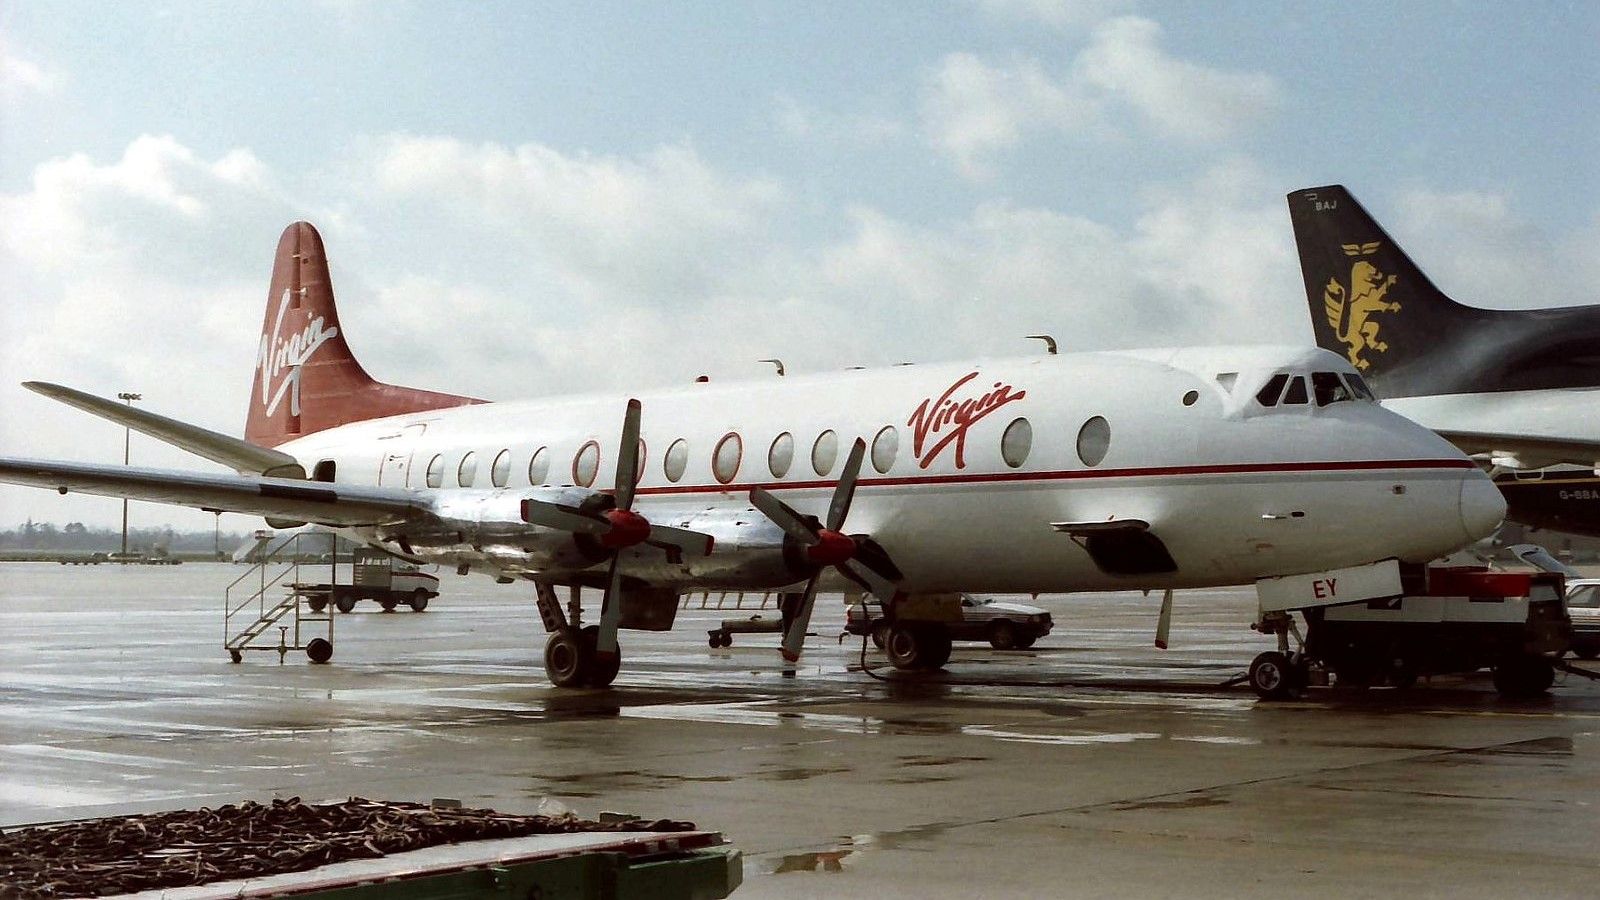 A Virgin Atlantic Vickers Viscount parked at an airport.